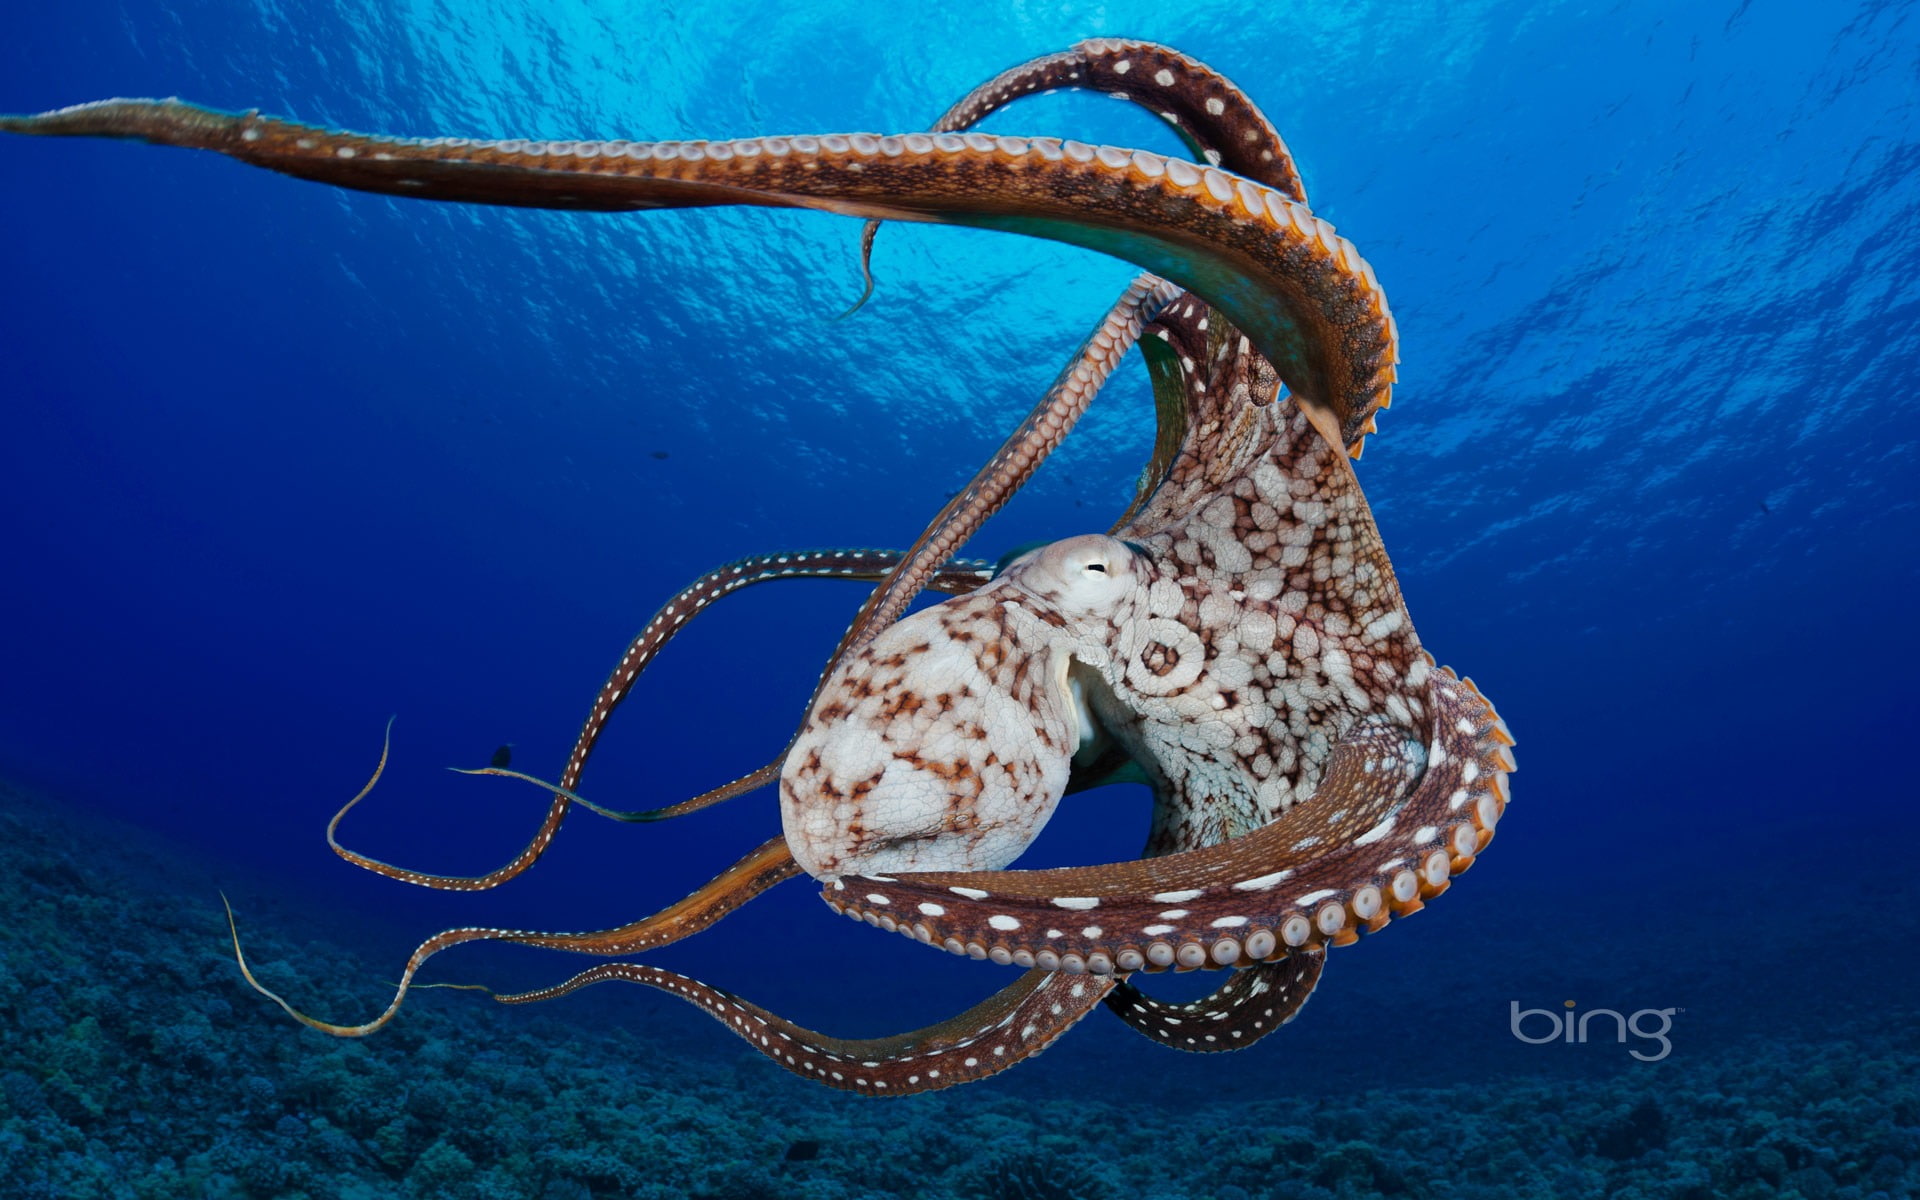 Undersea octopus-July 2013 Bing wallpaper, brown octopus illustration